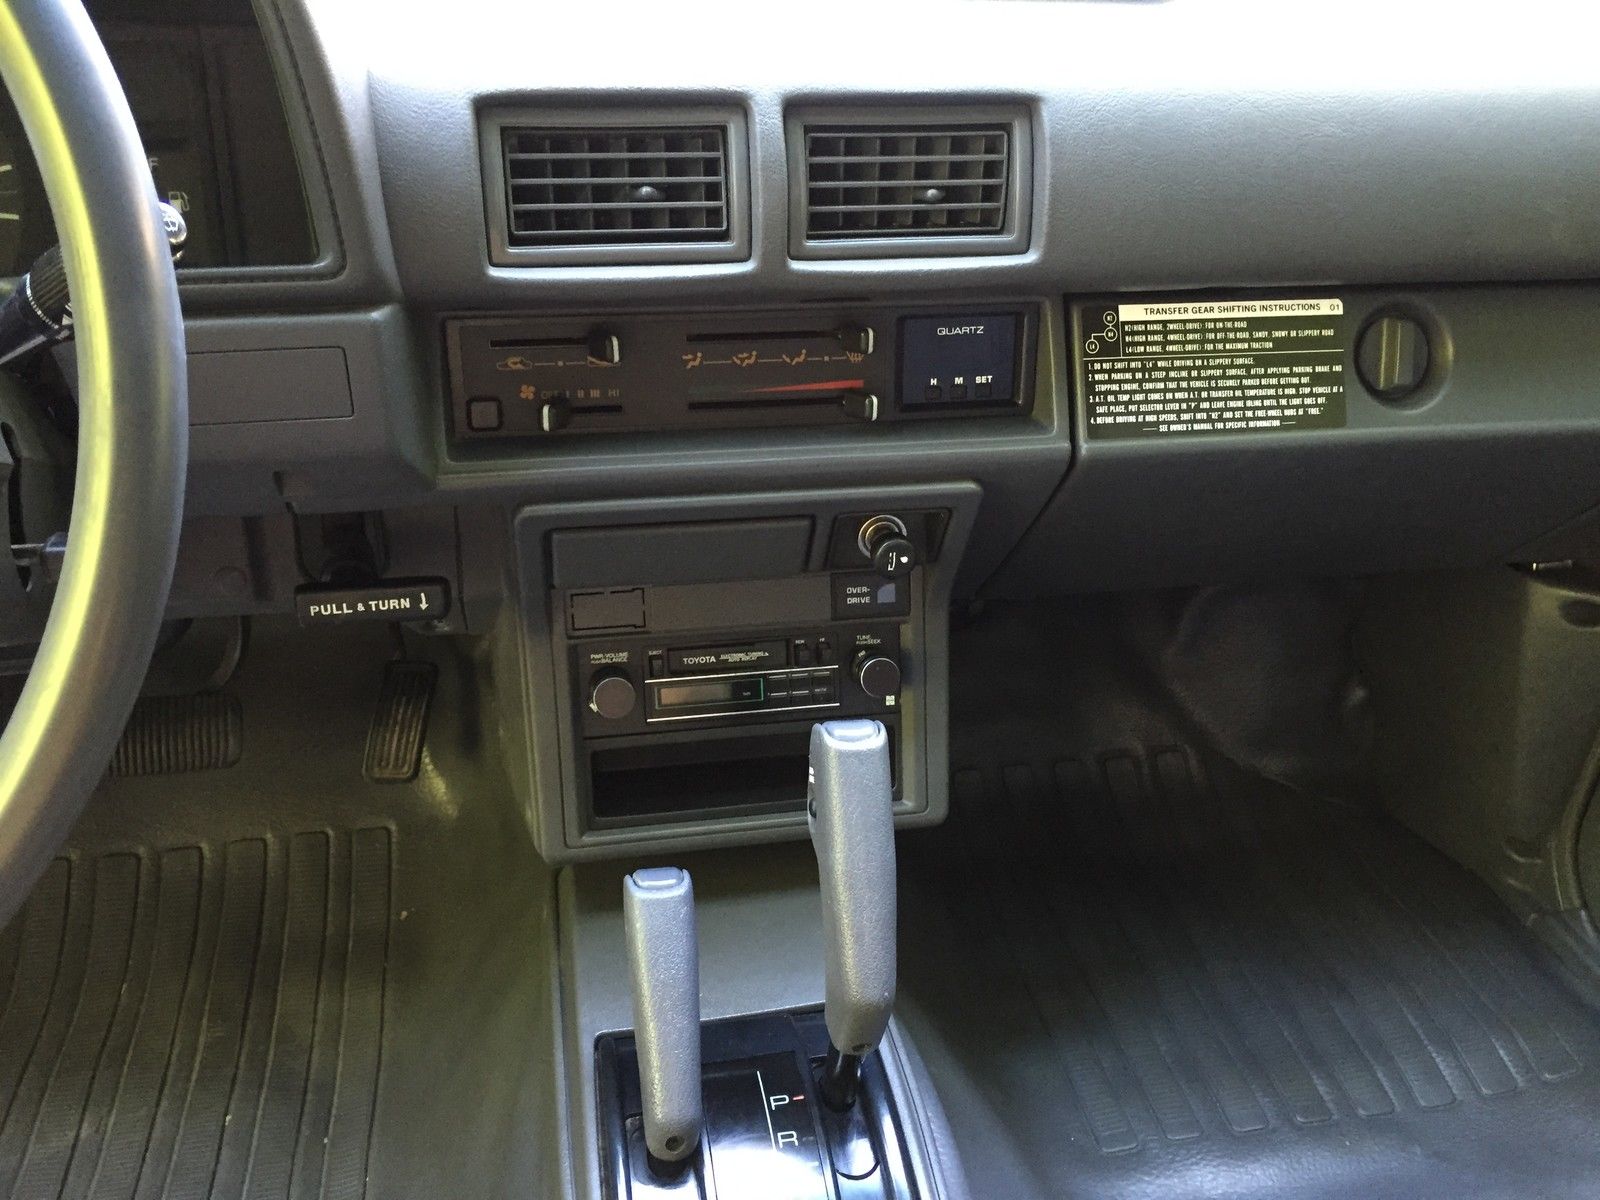 Rare 1987 Toyota Pickup 4x4 Xtra Cab Up for Sale on eBay ... 2010 toyota tundra fuse box 